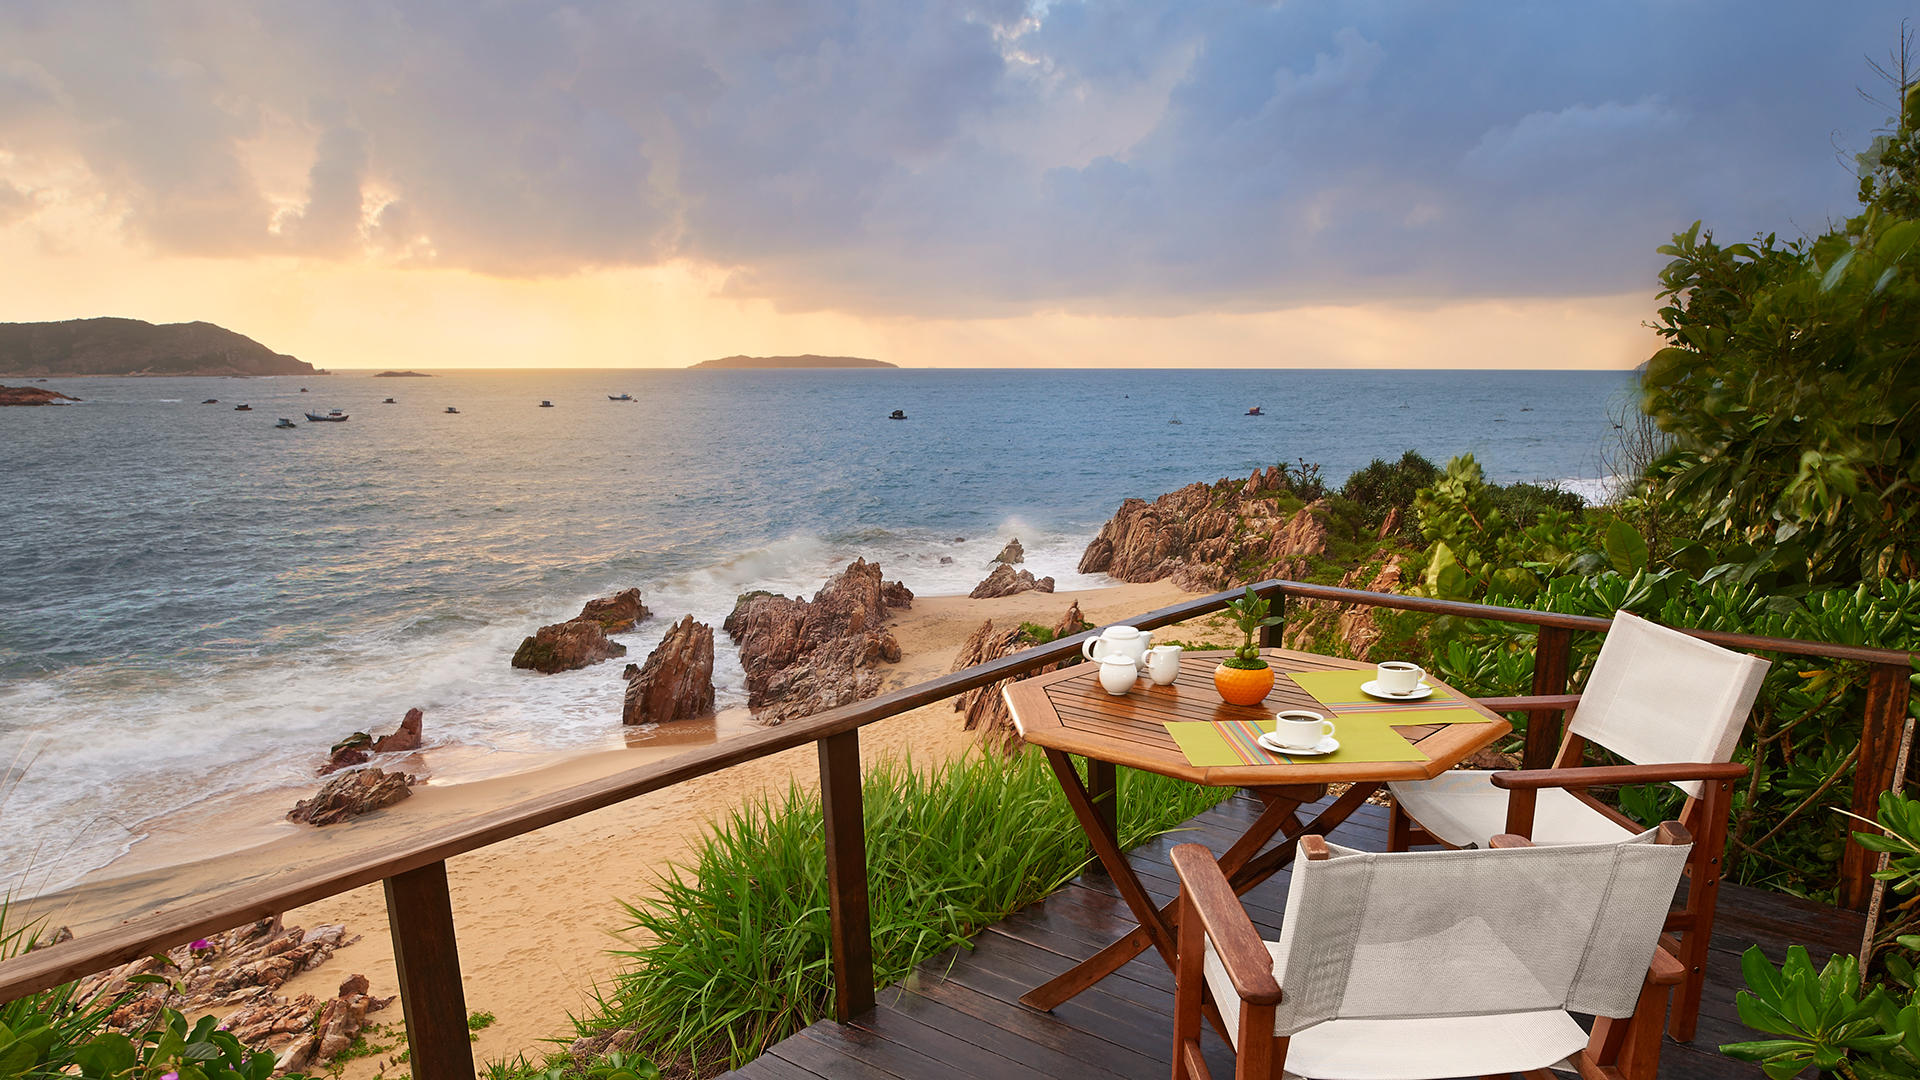 Top 8 Resorts for Luxury Honeymoon Packages in Vietnam